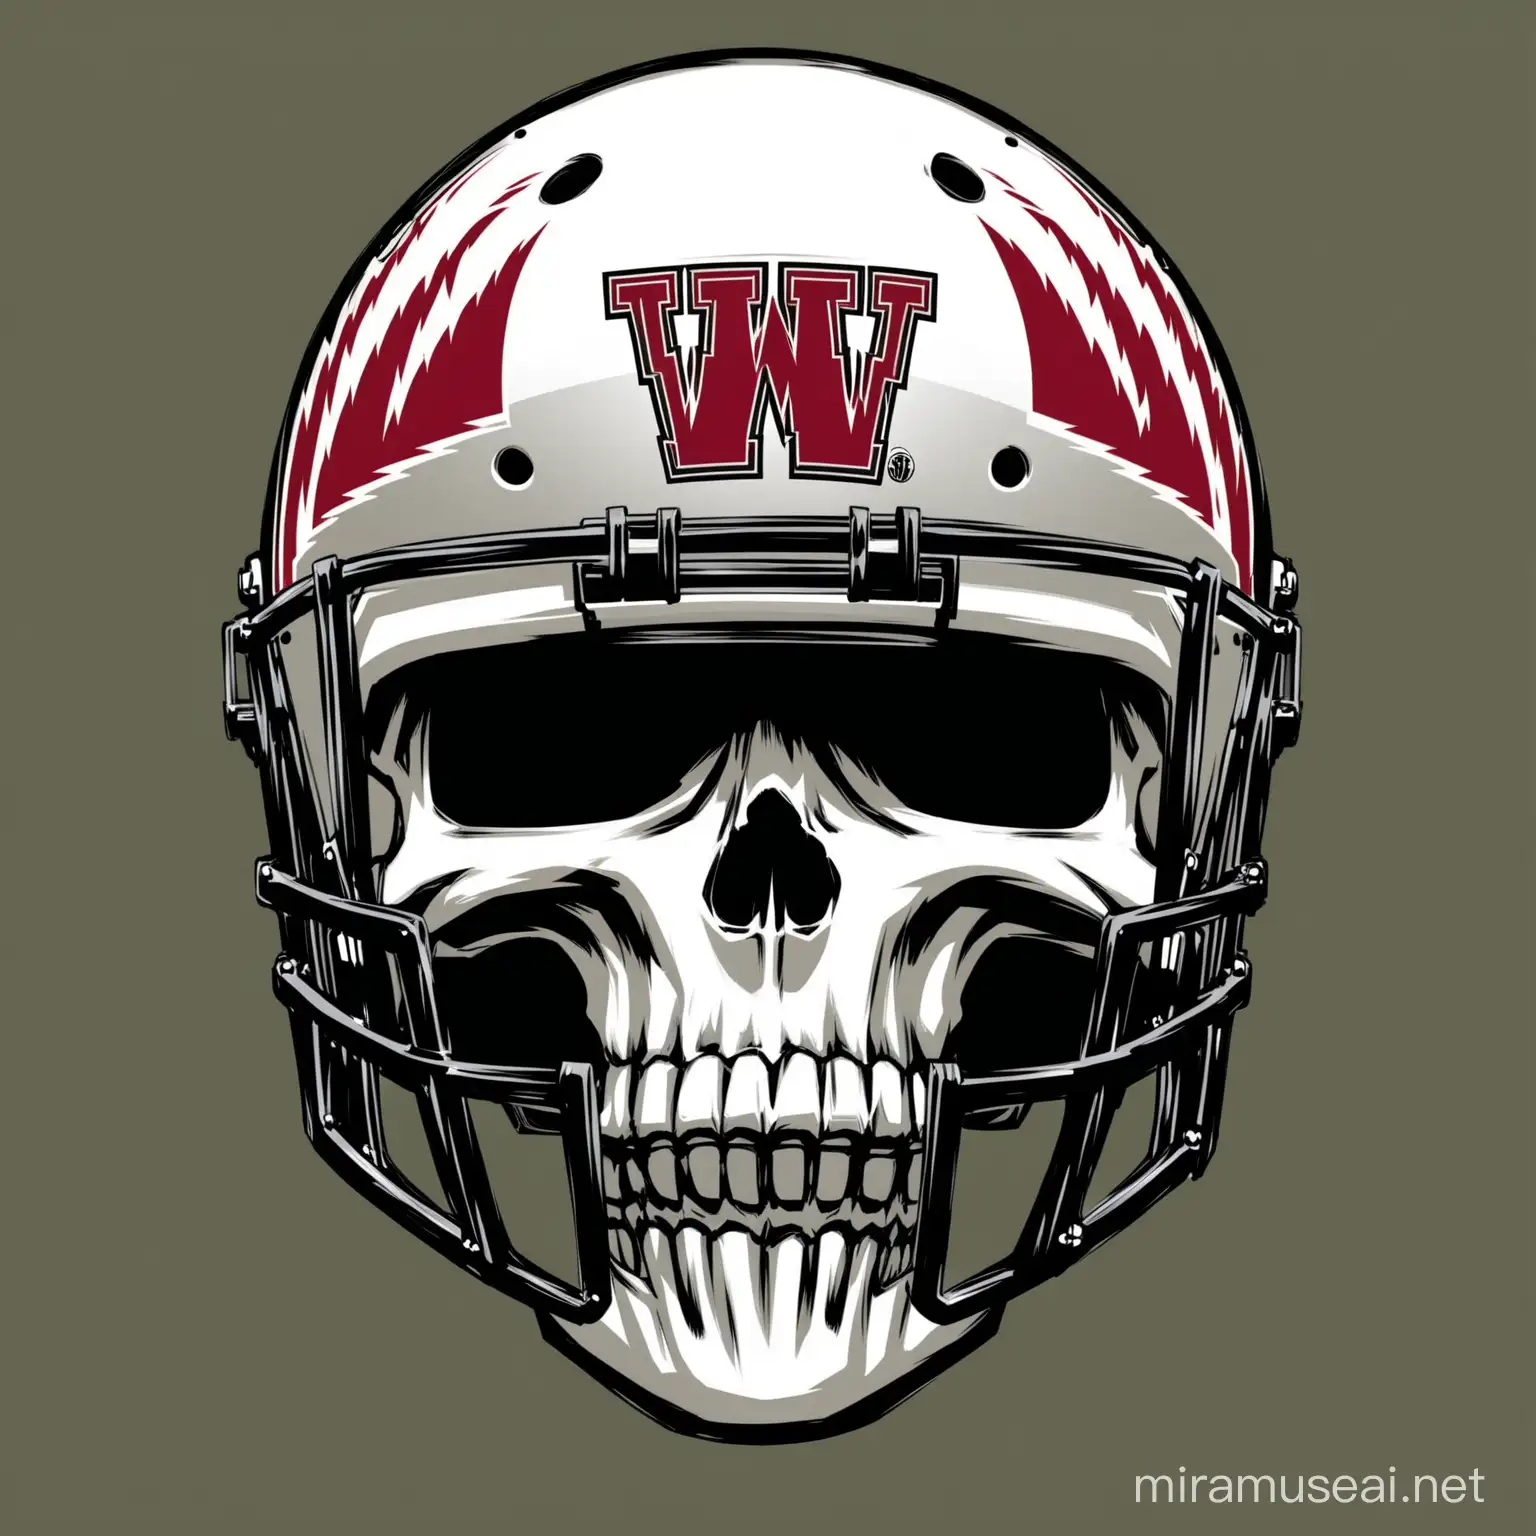 Washington Commanders Football Helmet on Skull Sports Fan Skull Wearing Official Team Gear